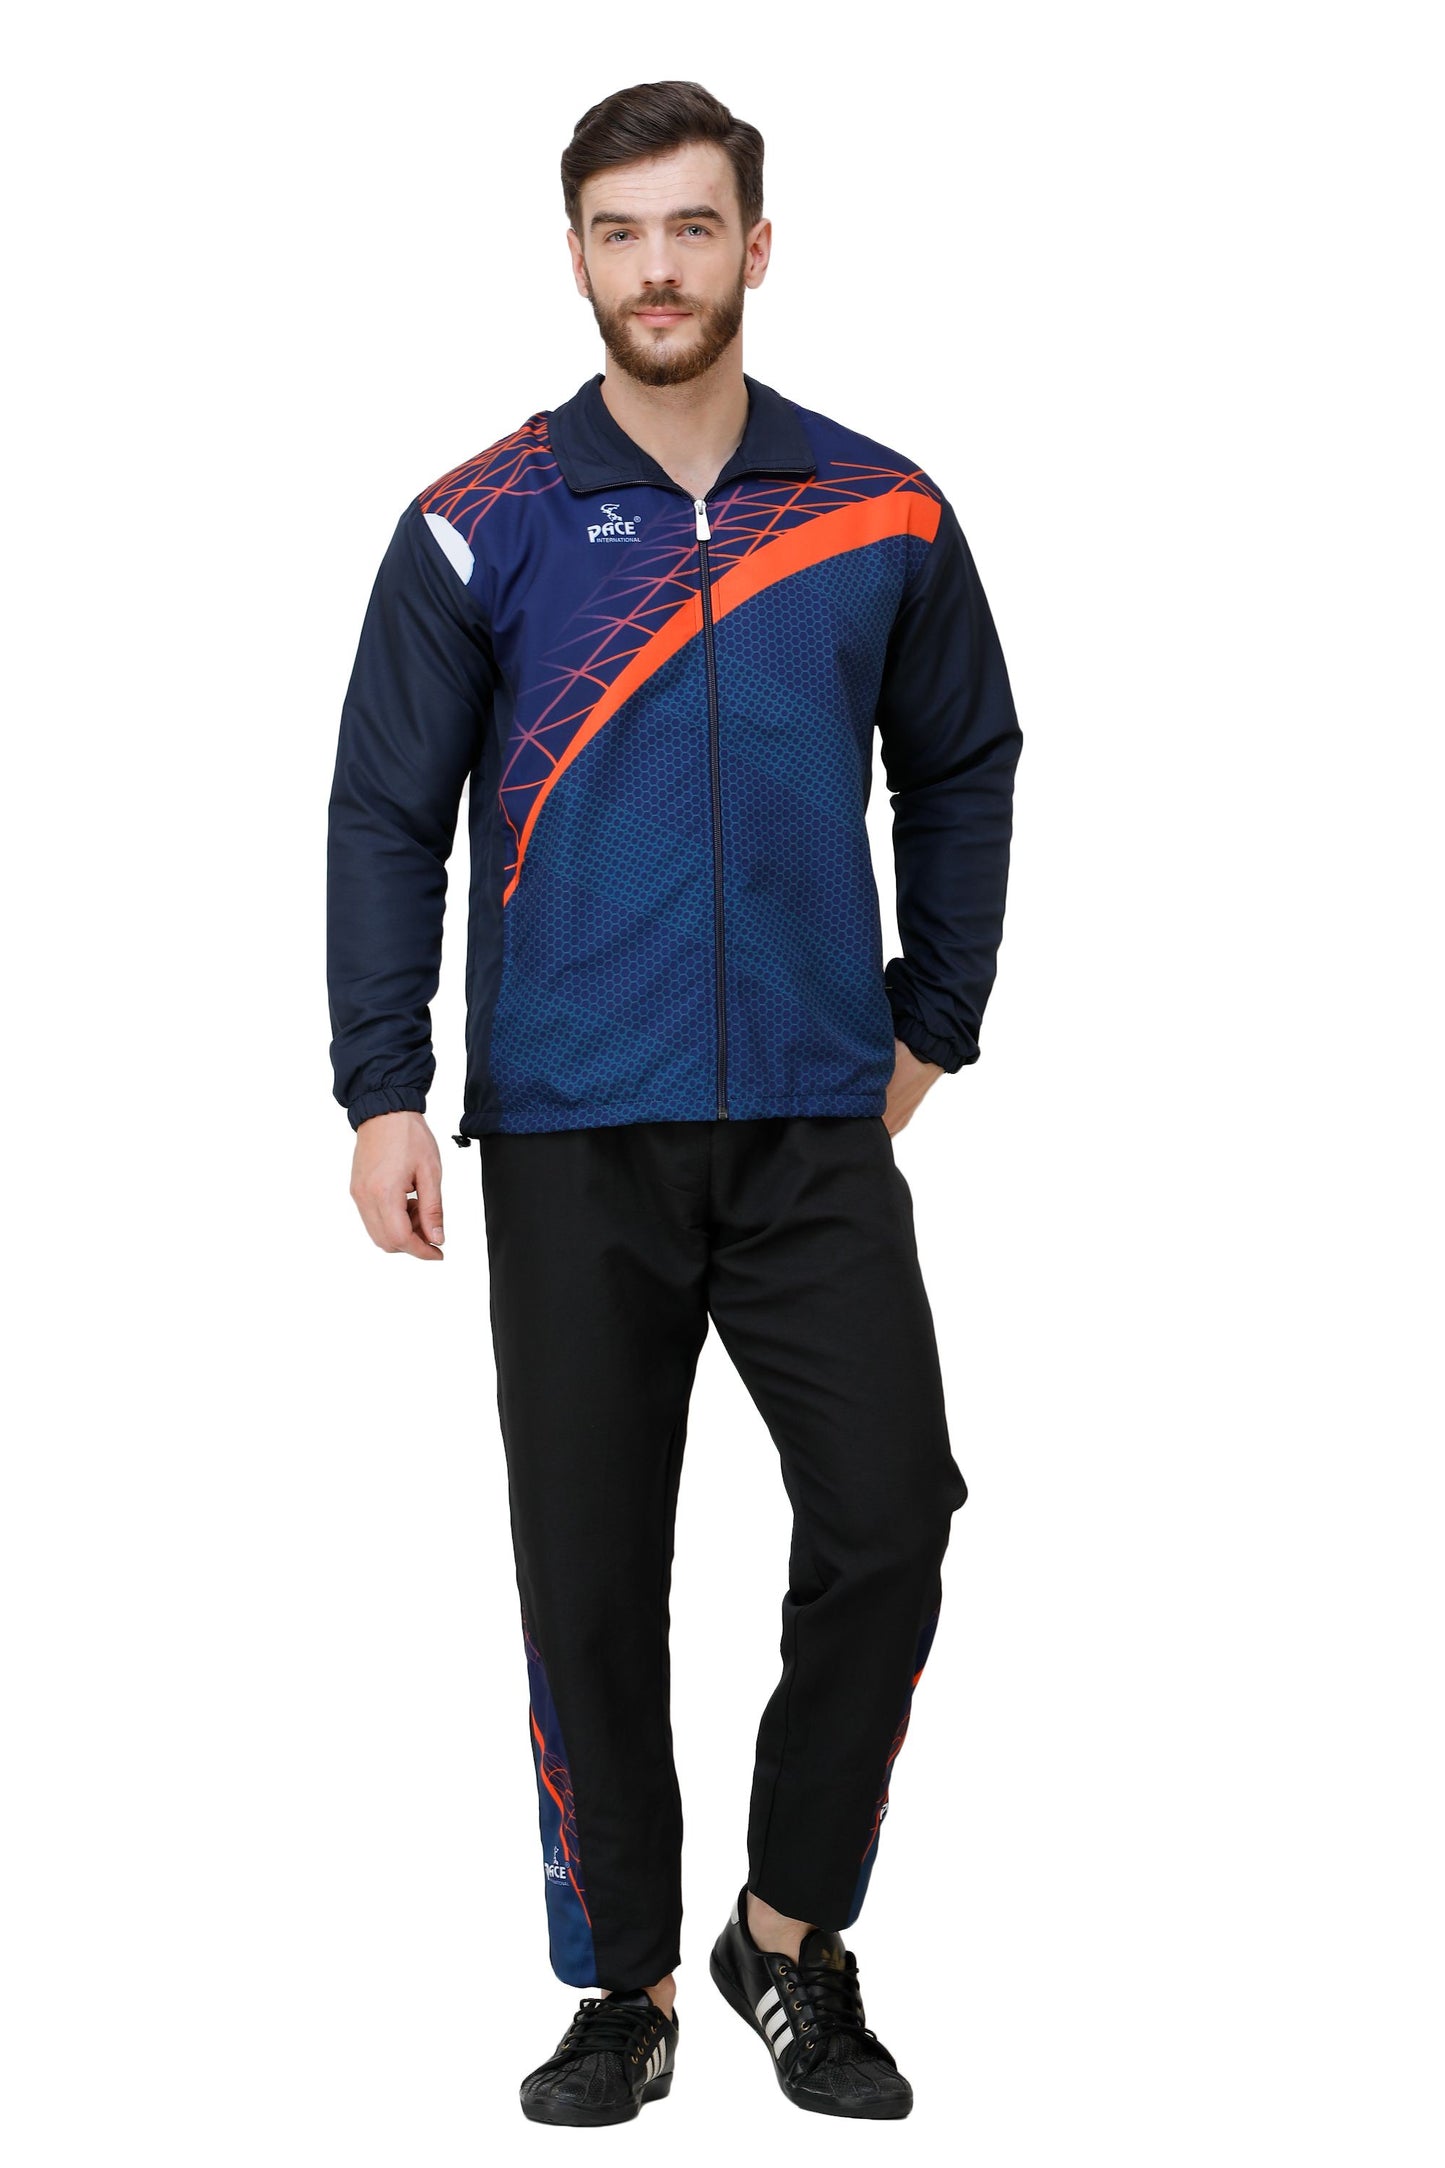 Pace International Men Printed Track Suit (Navy Blue/ Royal)